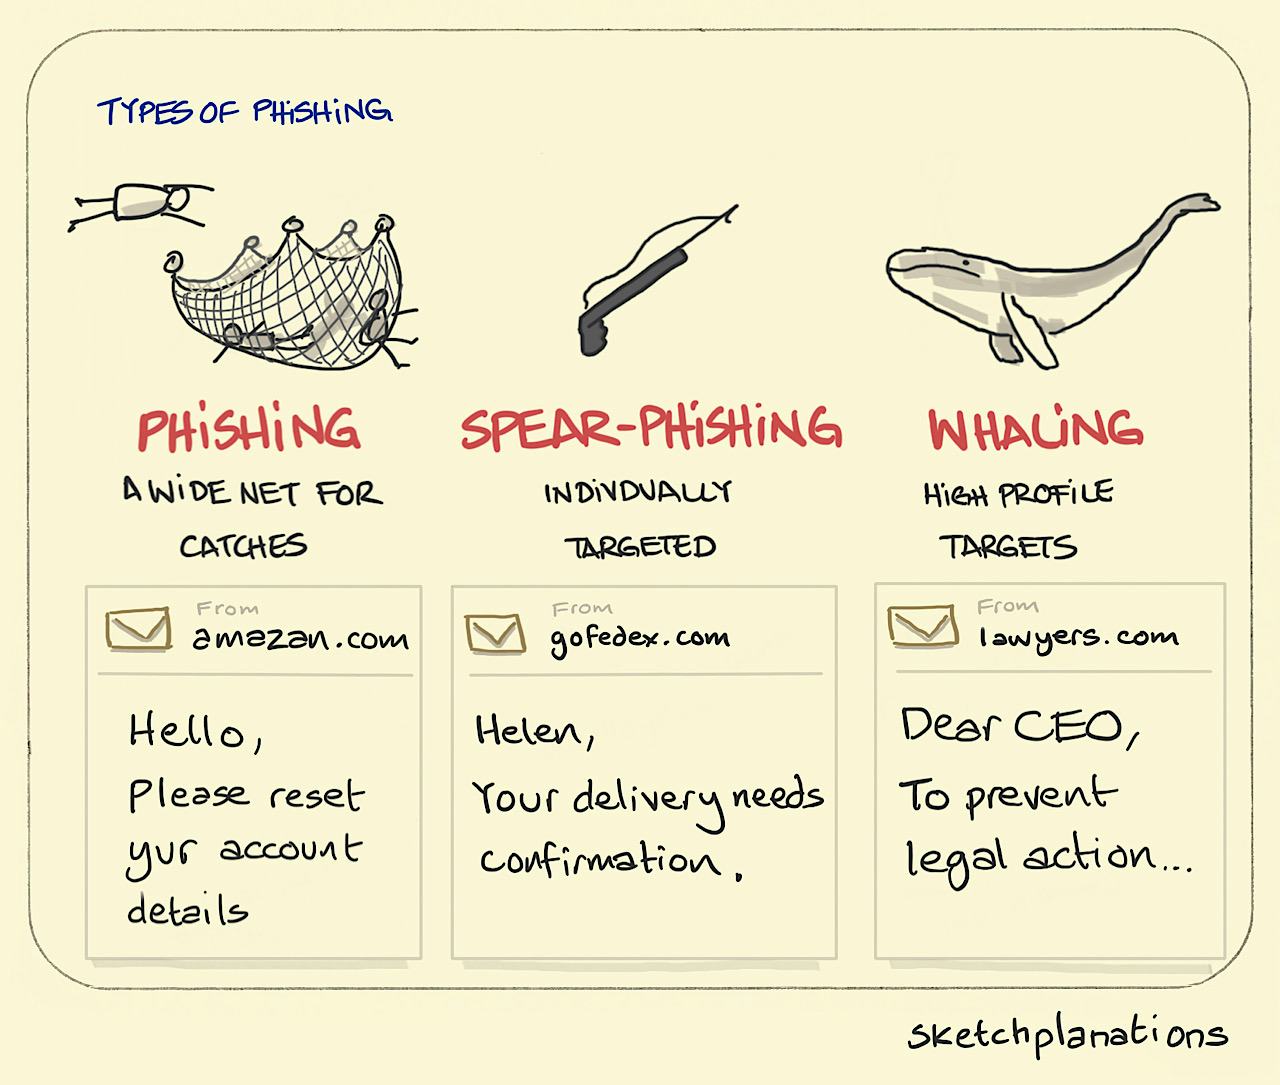 Types of phishing - Sketchplanations